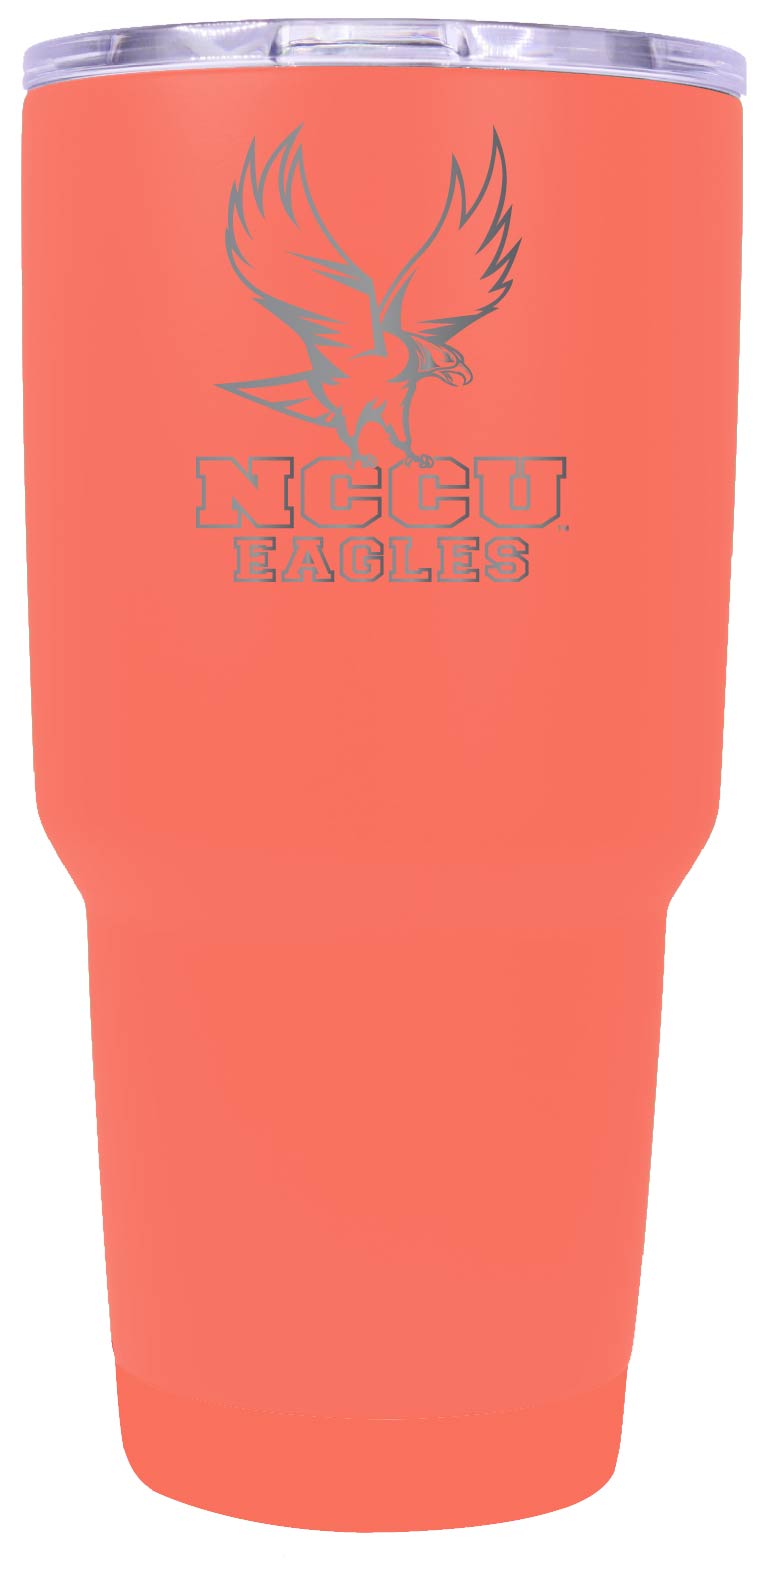 North Carolina Central Eagles Premium Laser Engraved Tumbler - 24oz Stainless Steel Insulated Mug Choose Your Color.